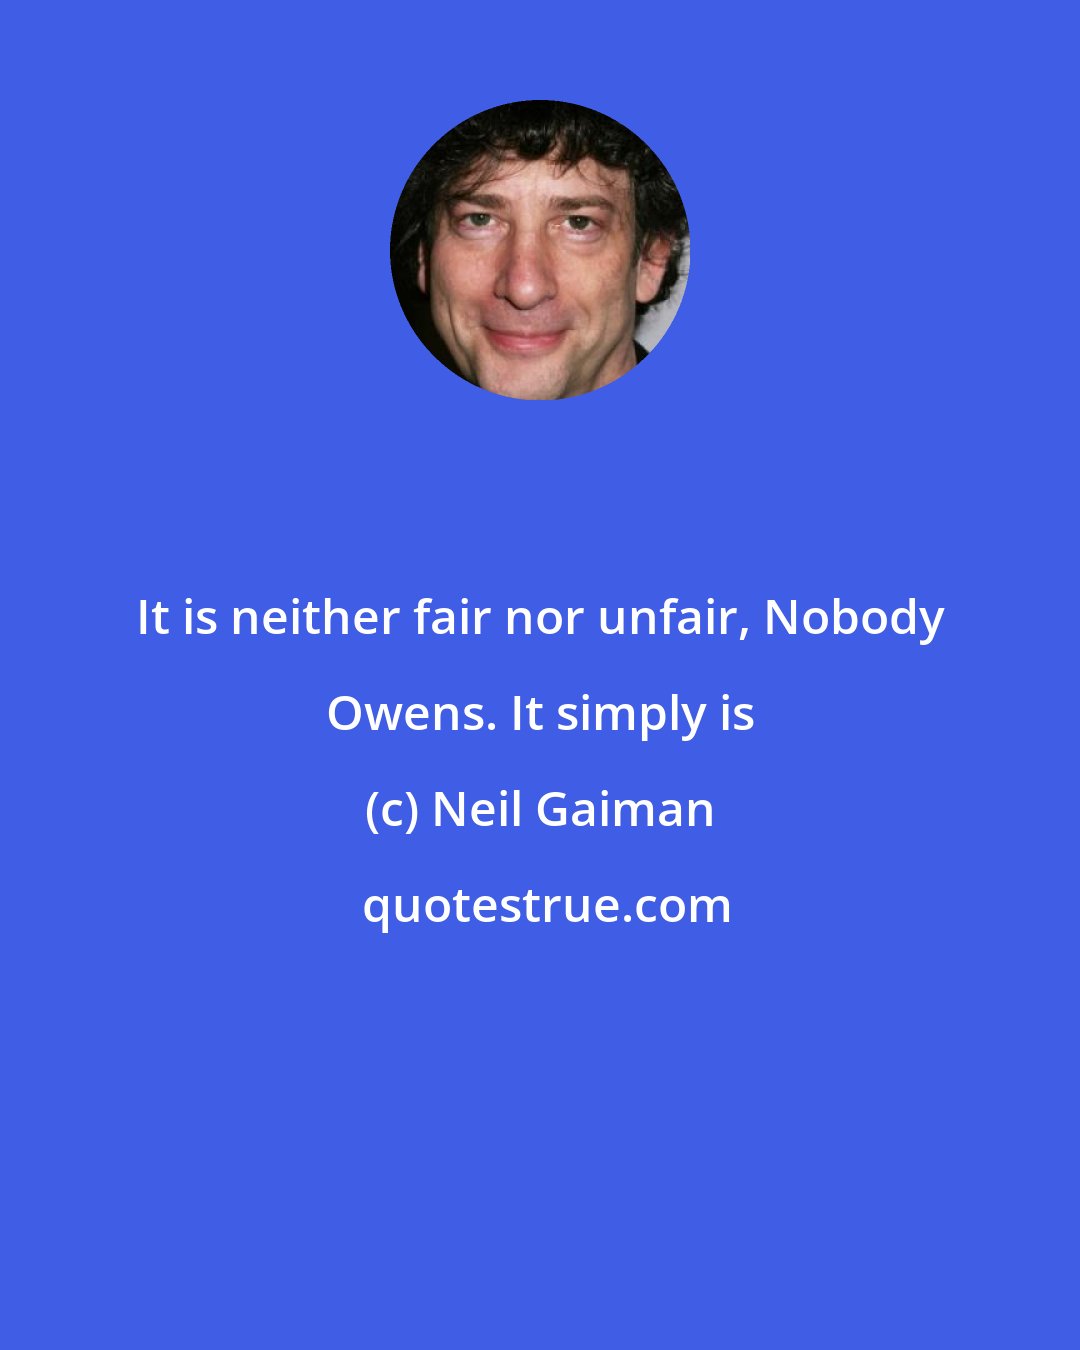 Neil Gaiman: It is neither fair nor unfair, Nobody Owens. It simply is